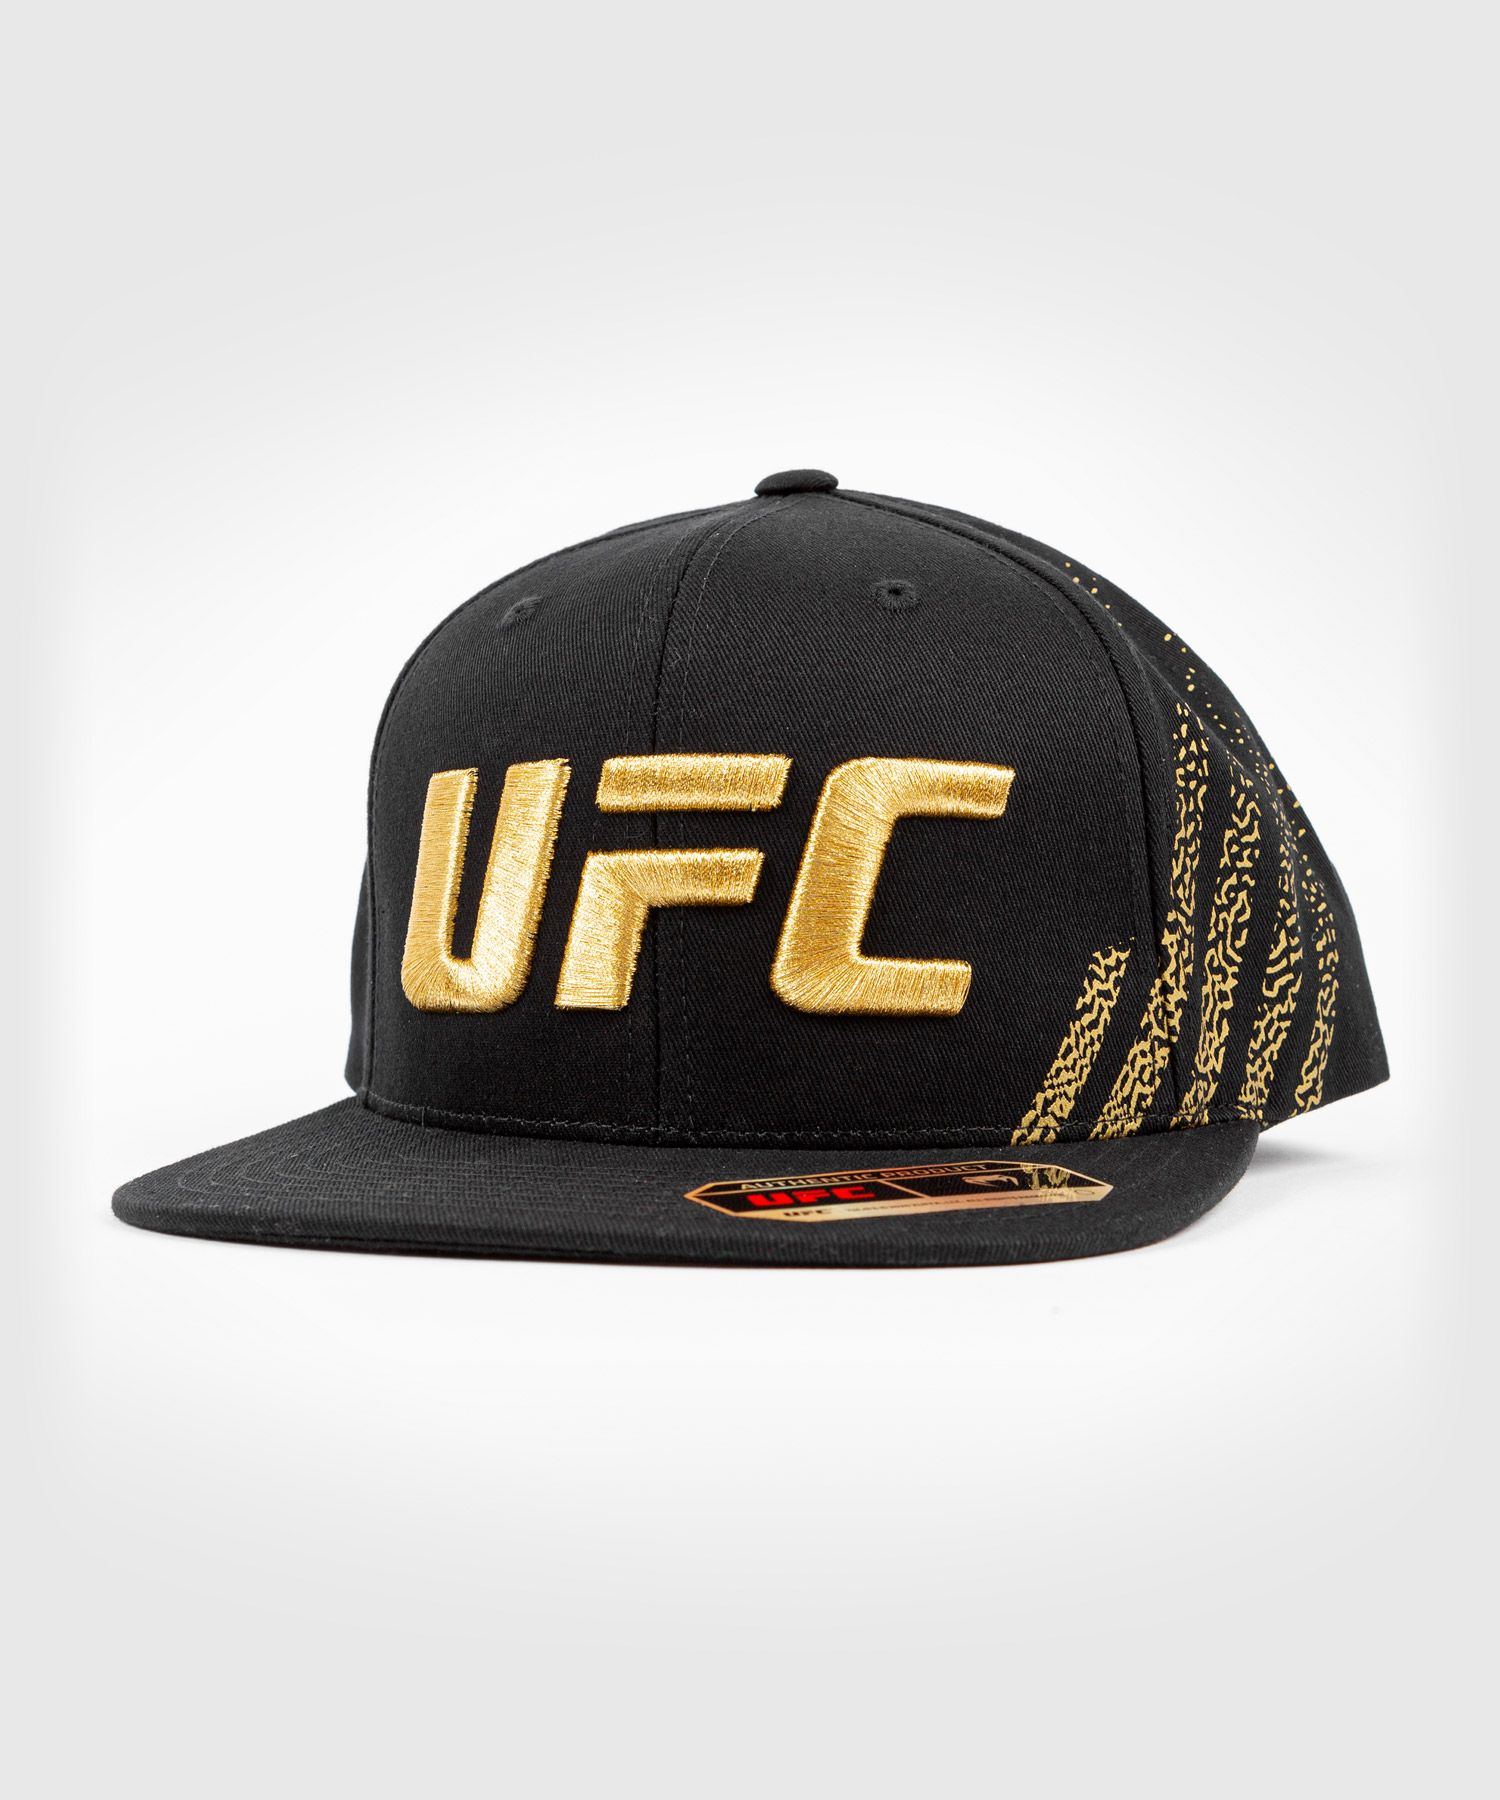 Gorra Unisex UFC Venum Authentic Fight Night Walkout - Campeón 